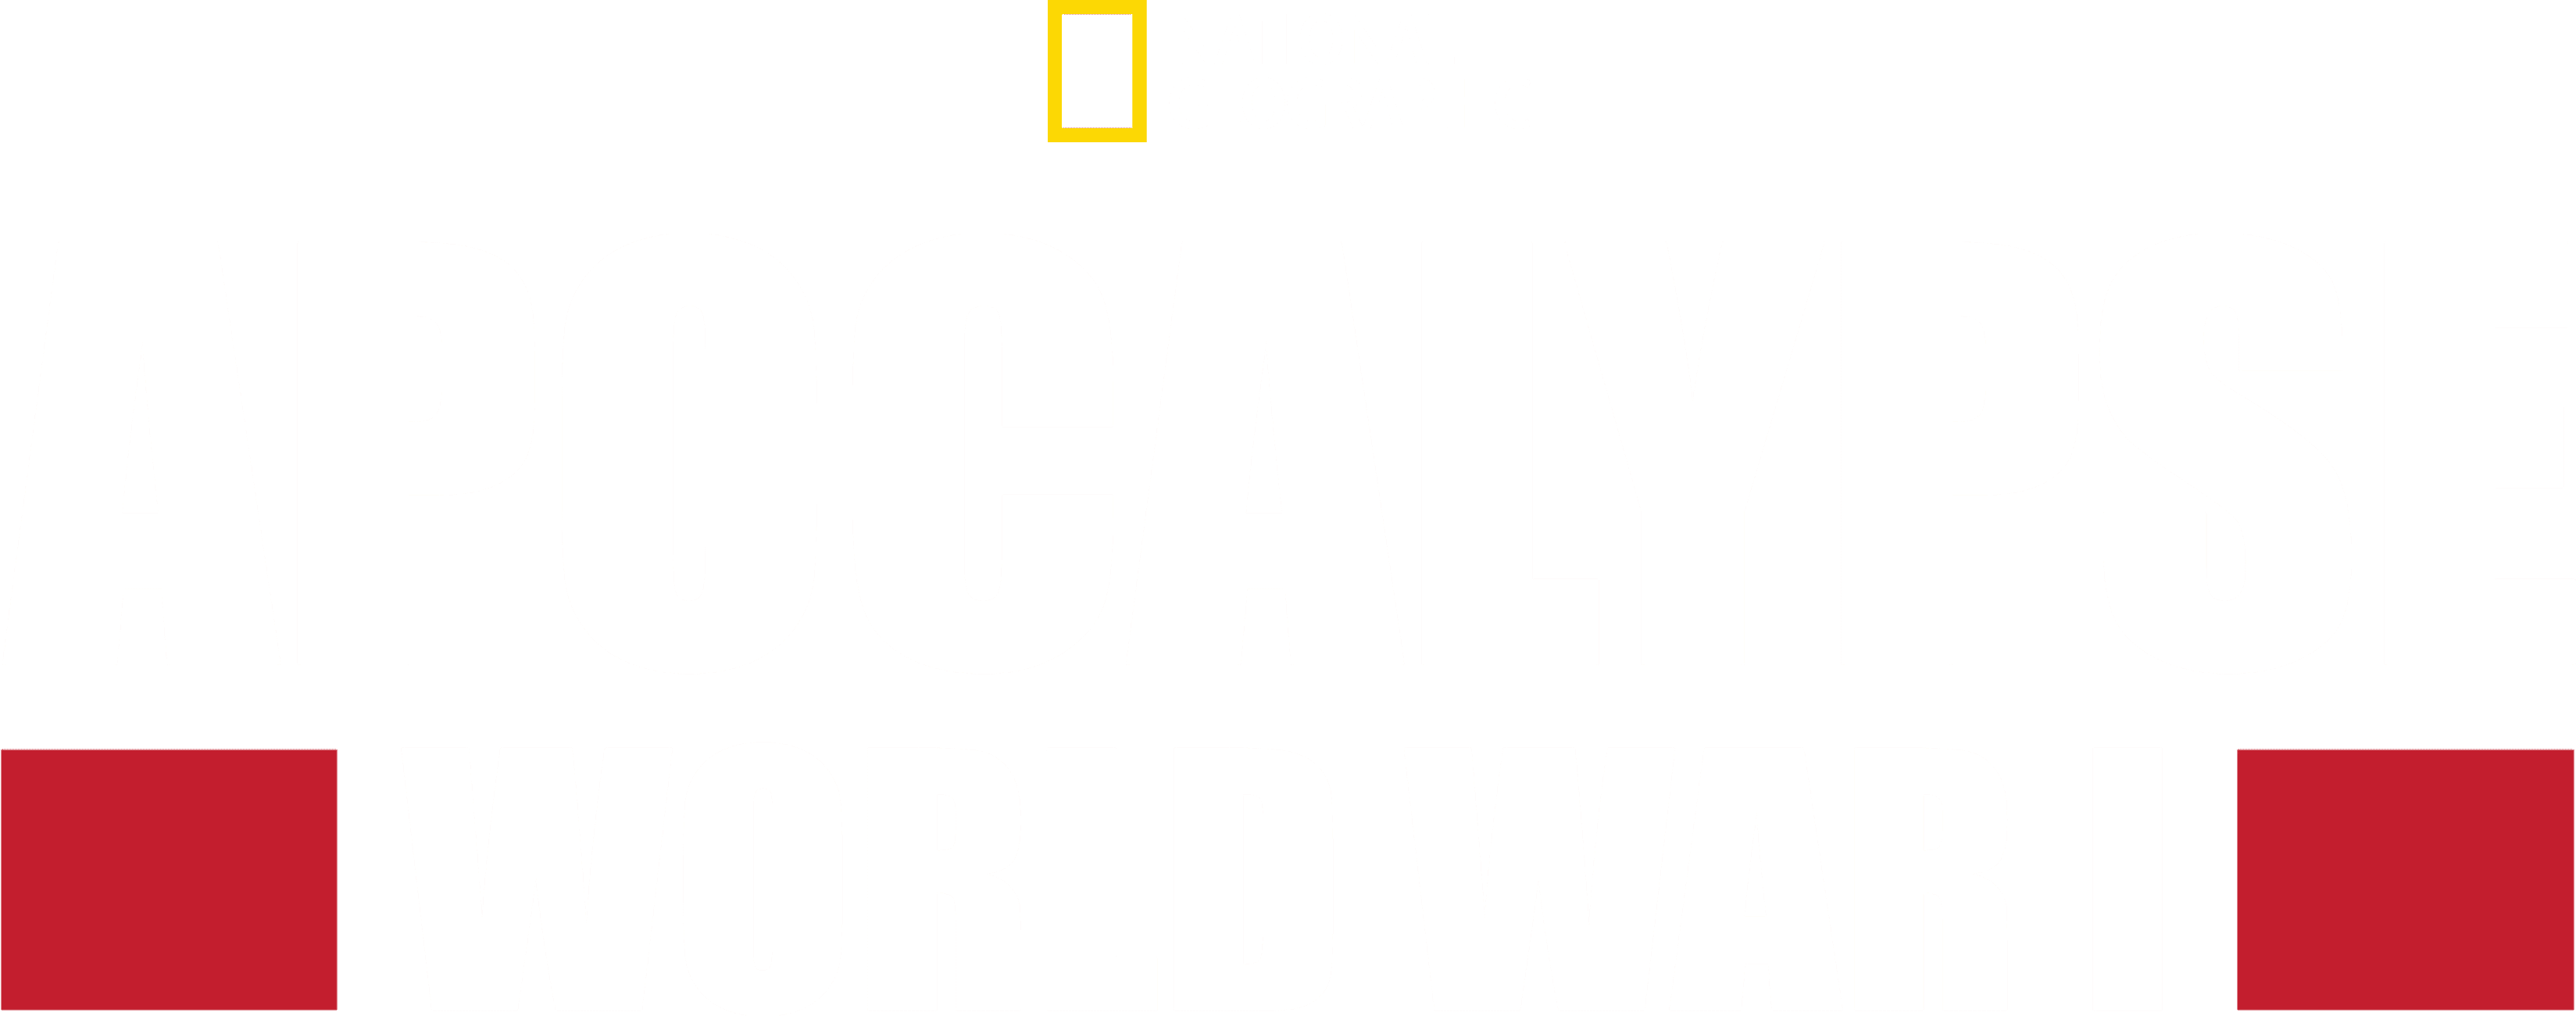 Apocalypse: World War I logo